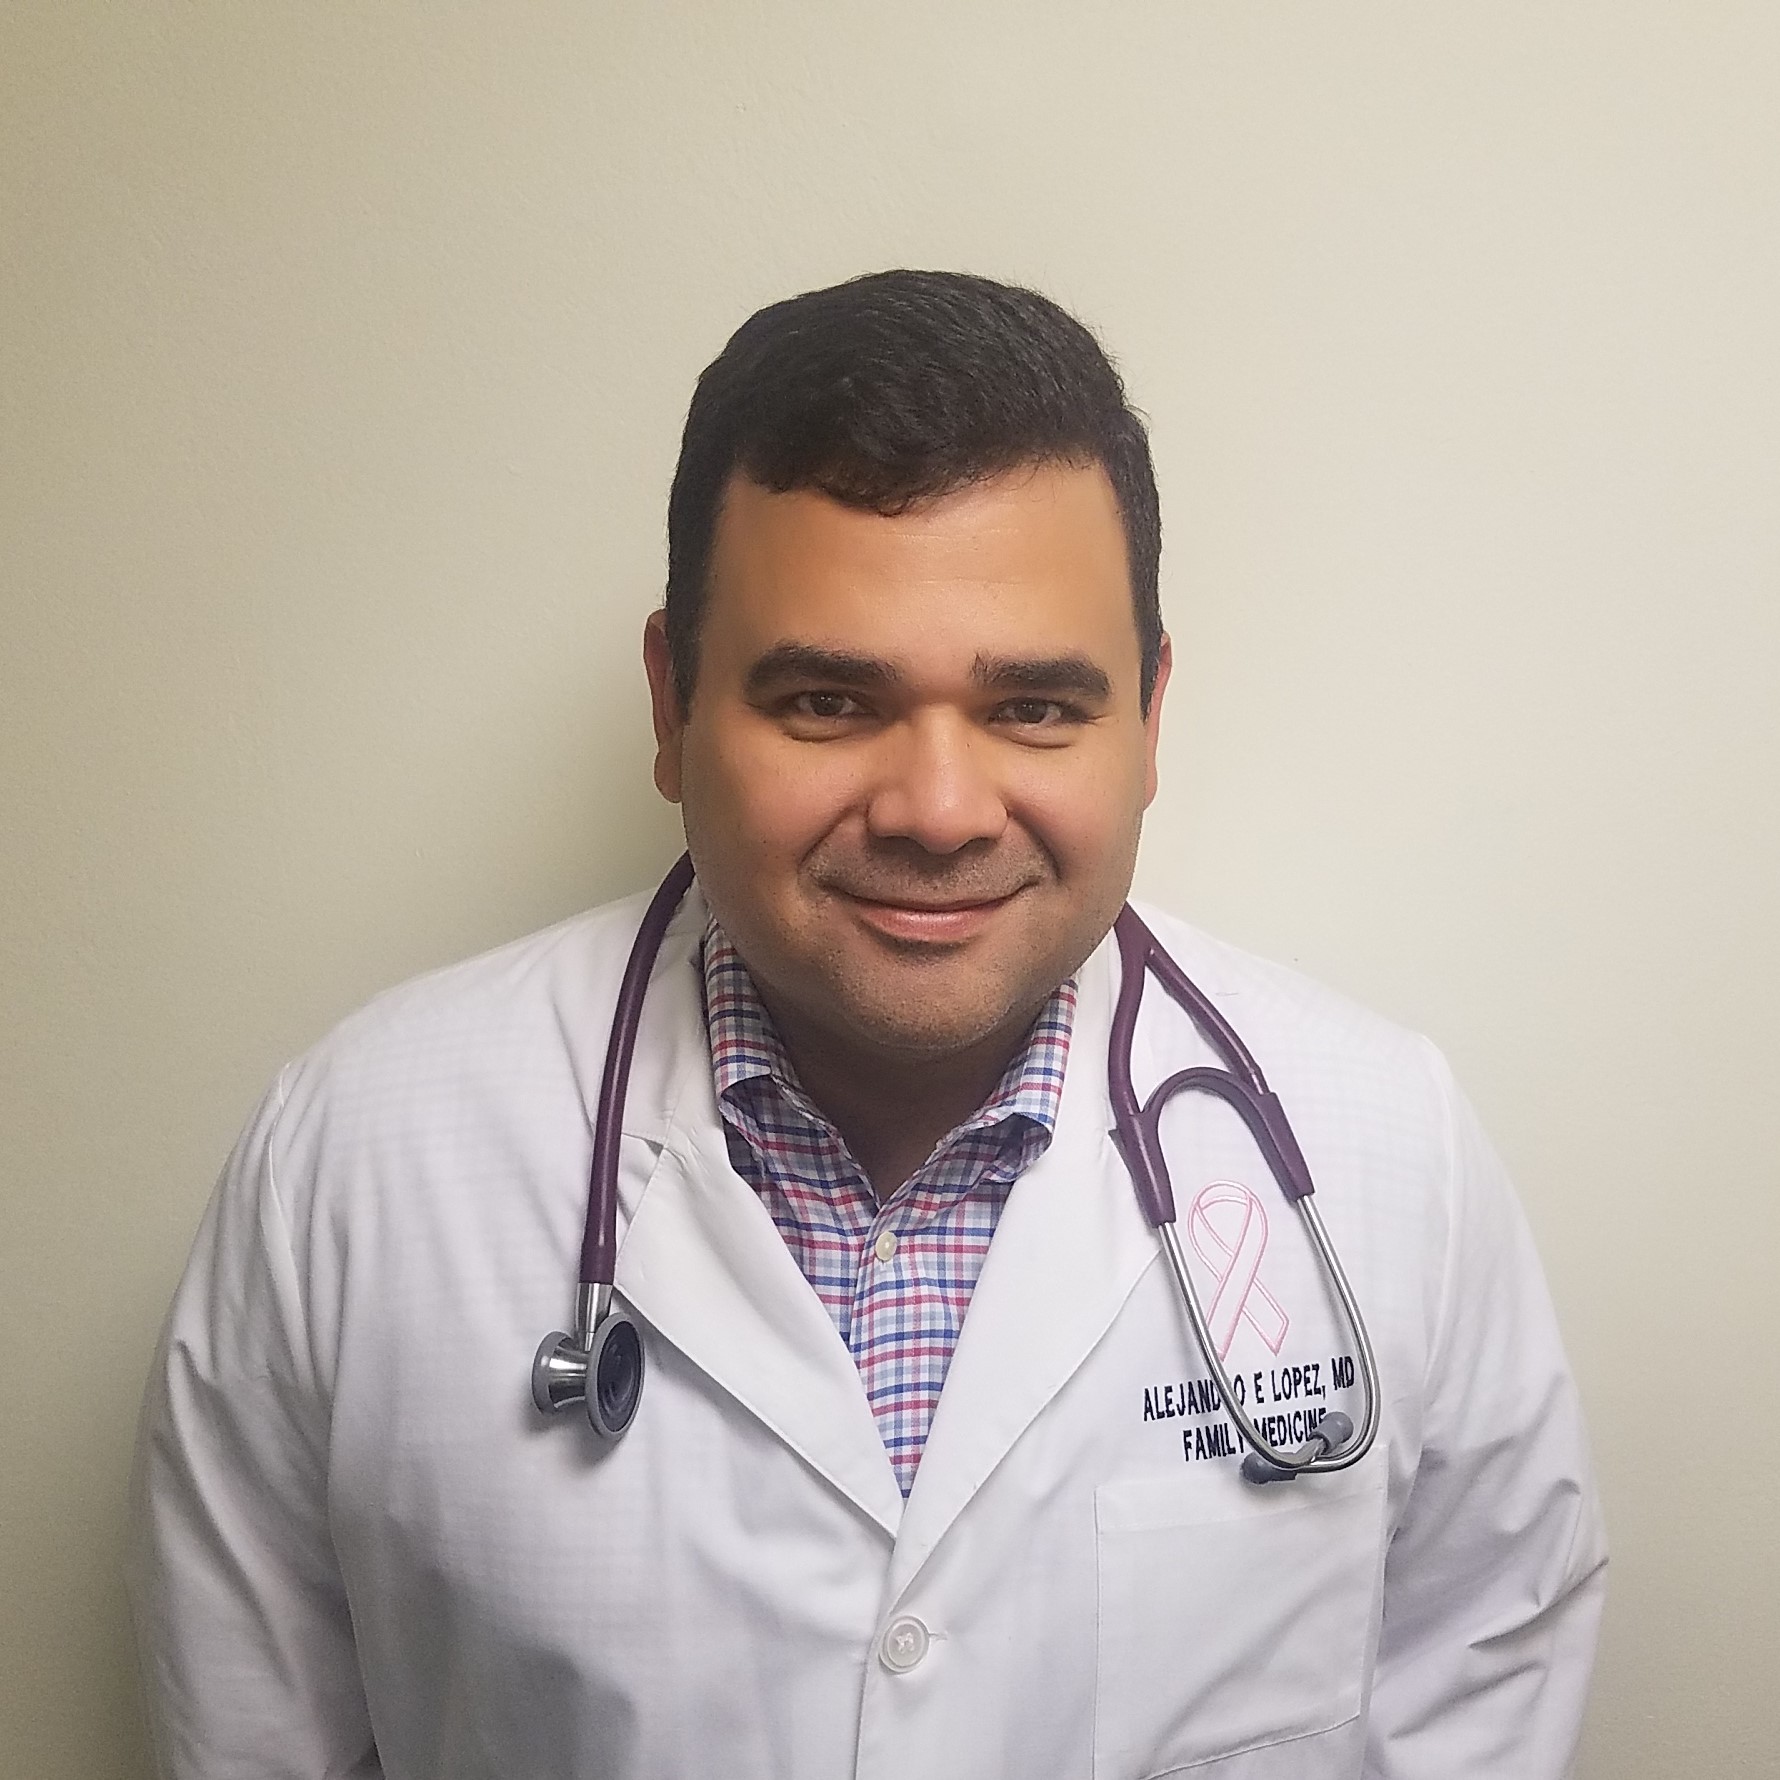 Dr. Alejandro E. Lopez MD